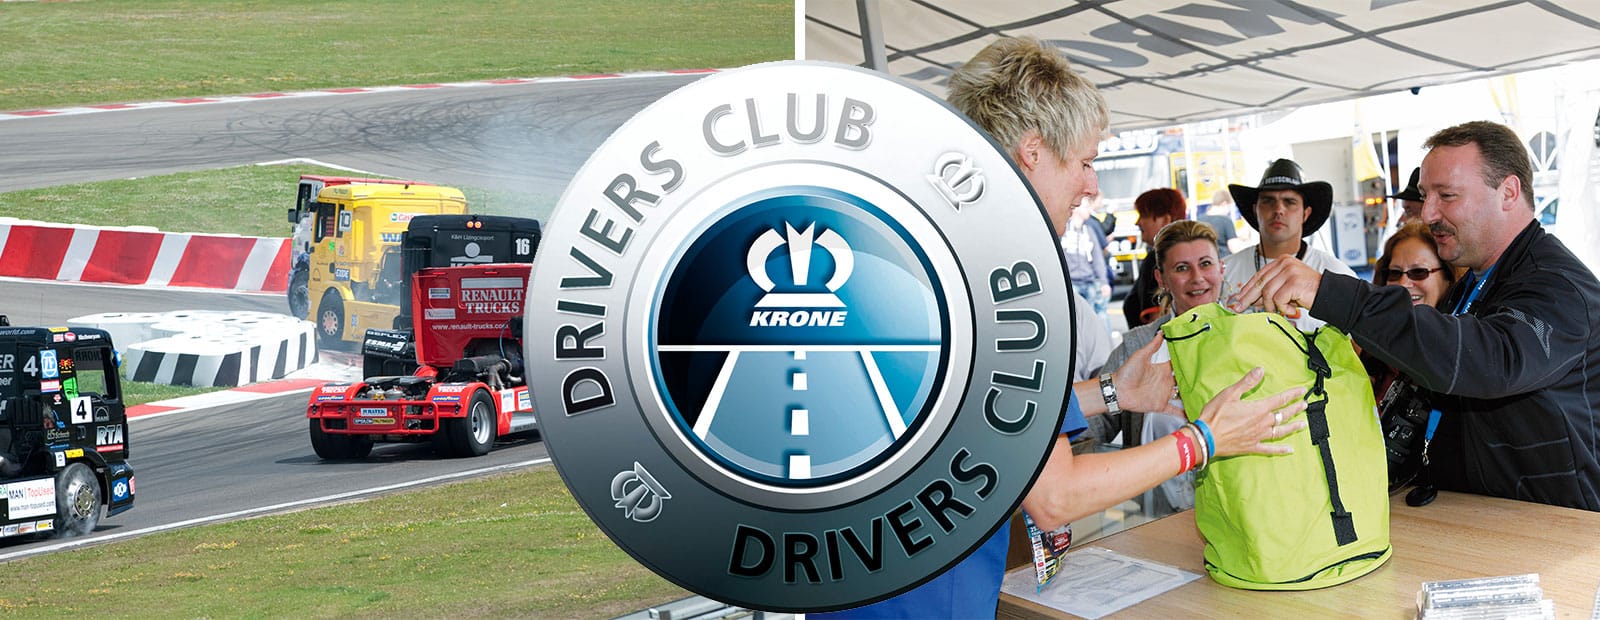 Krone Drivers Club